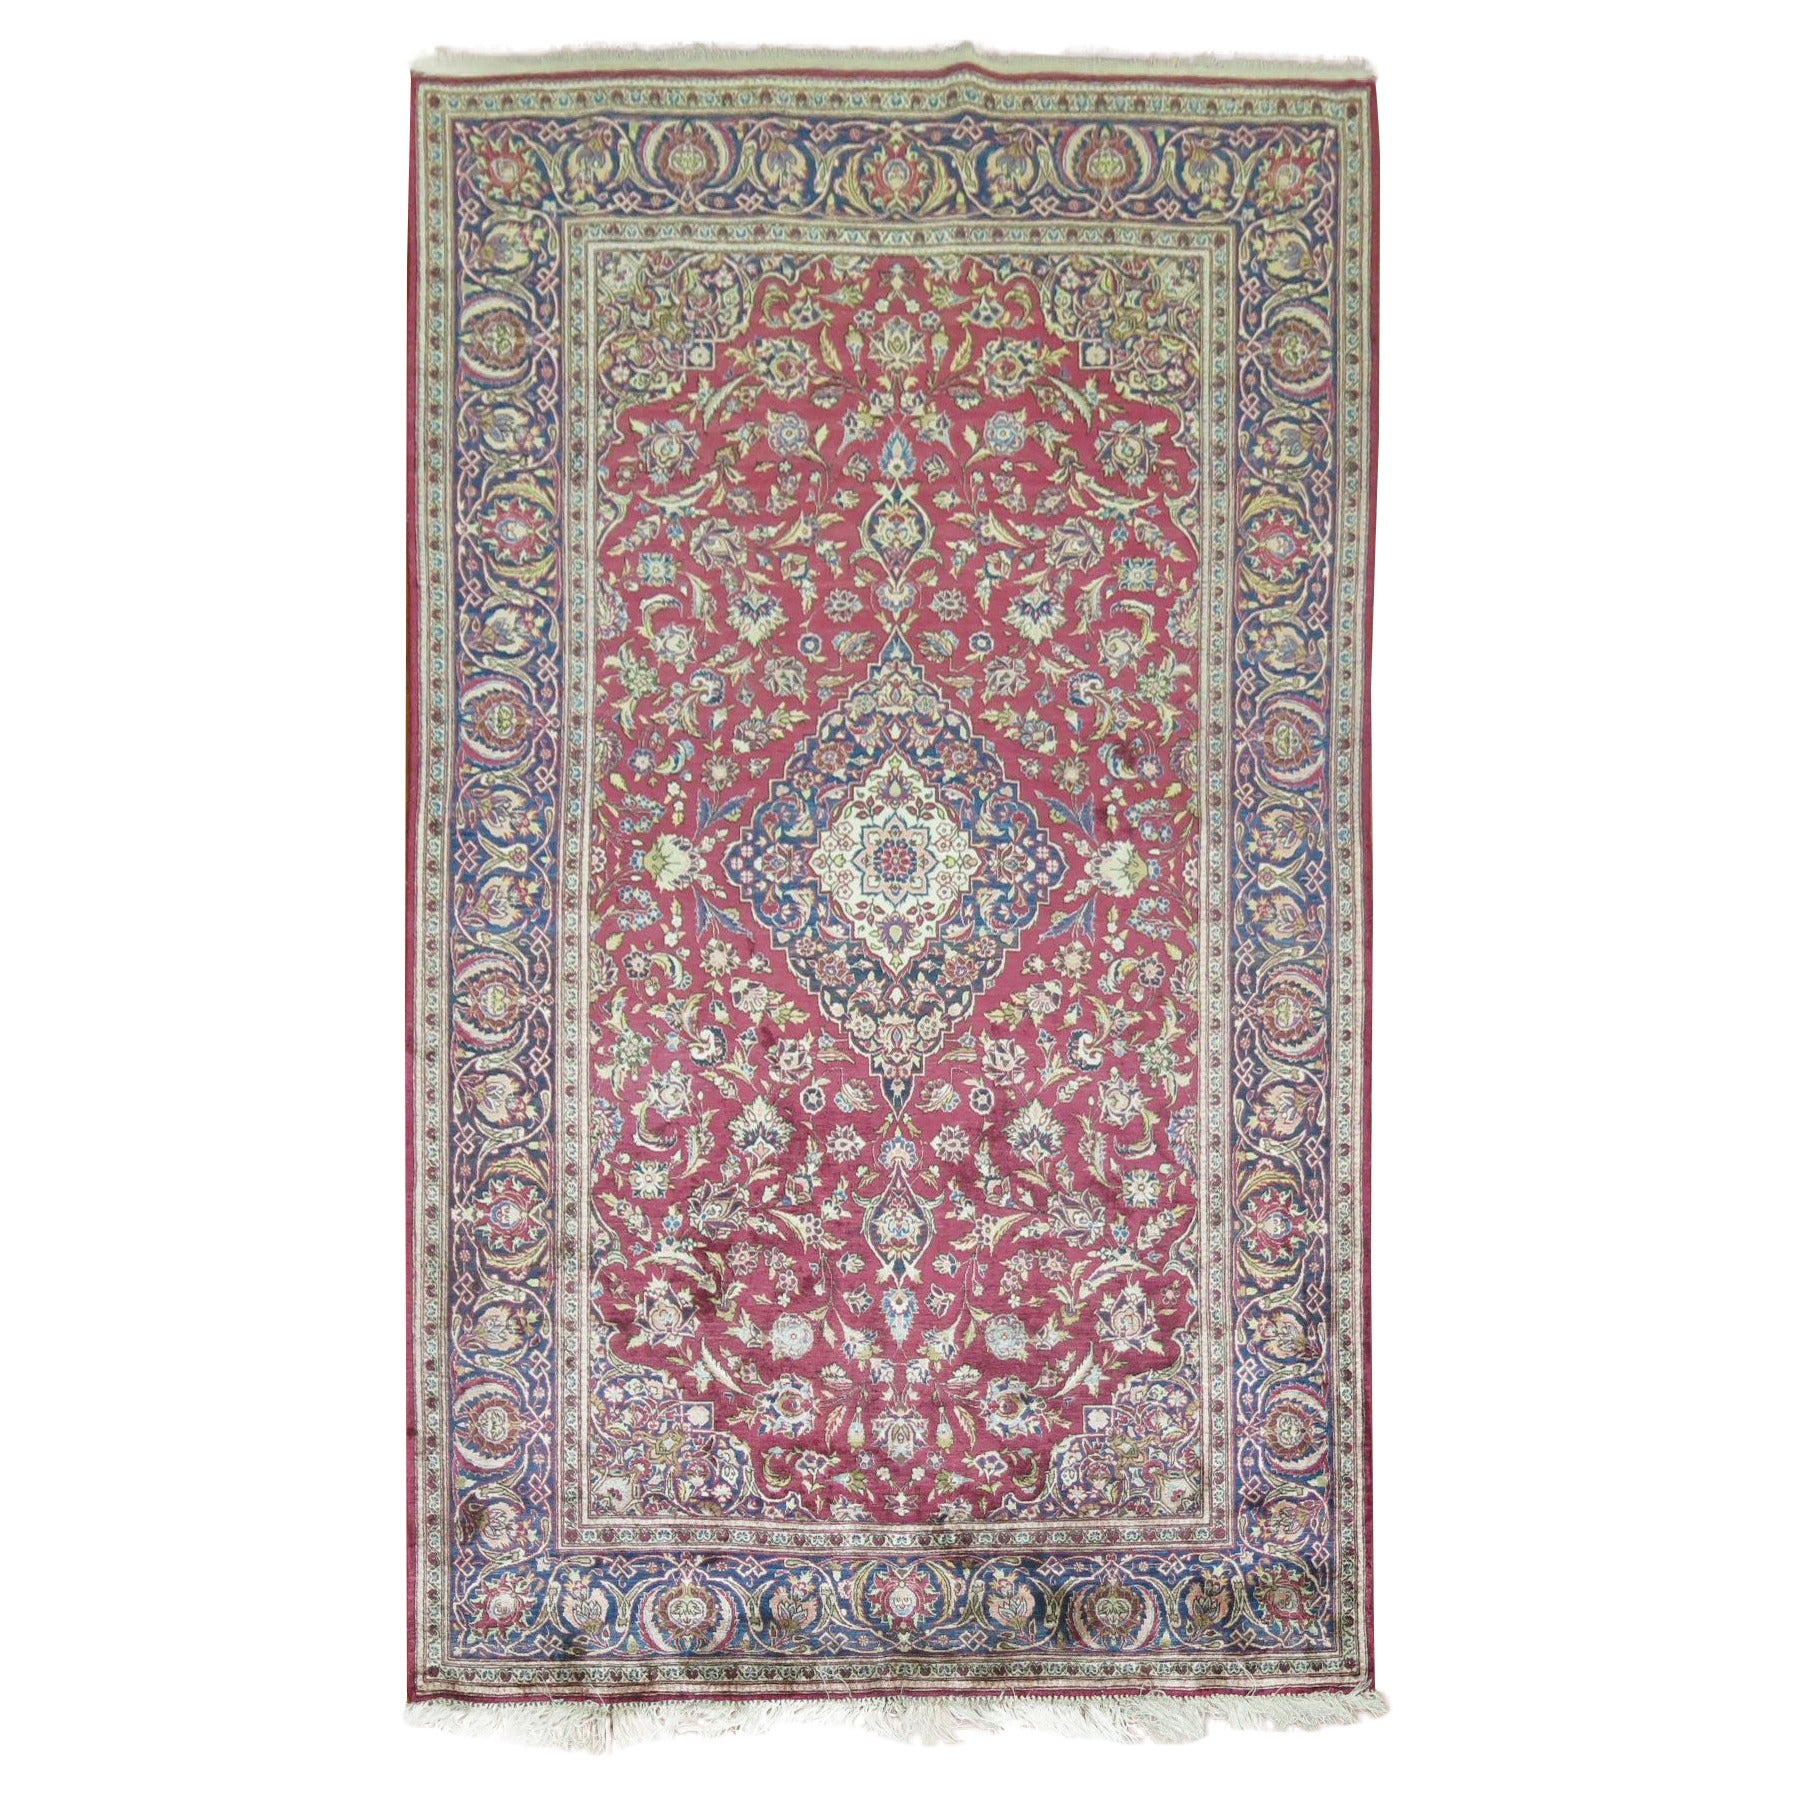 Antique Persian Silk Area Rug